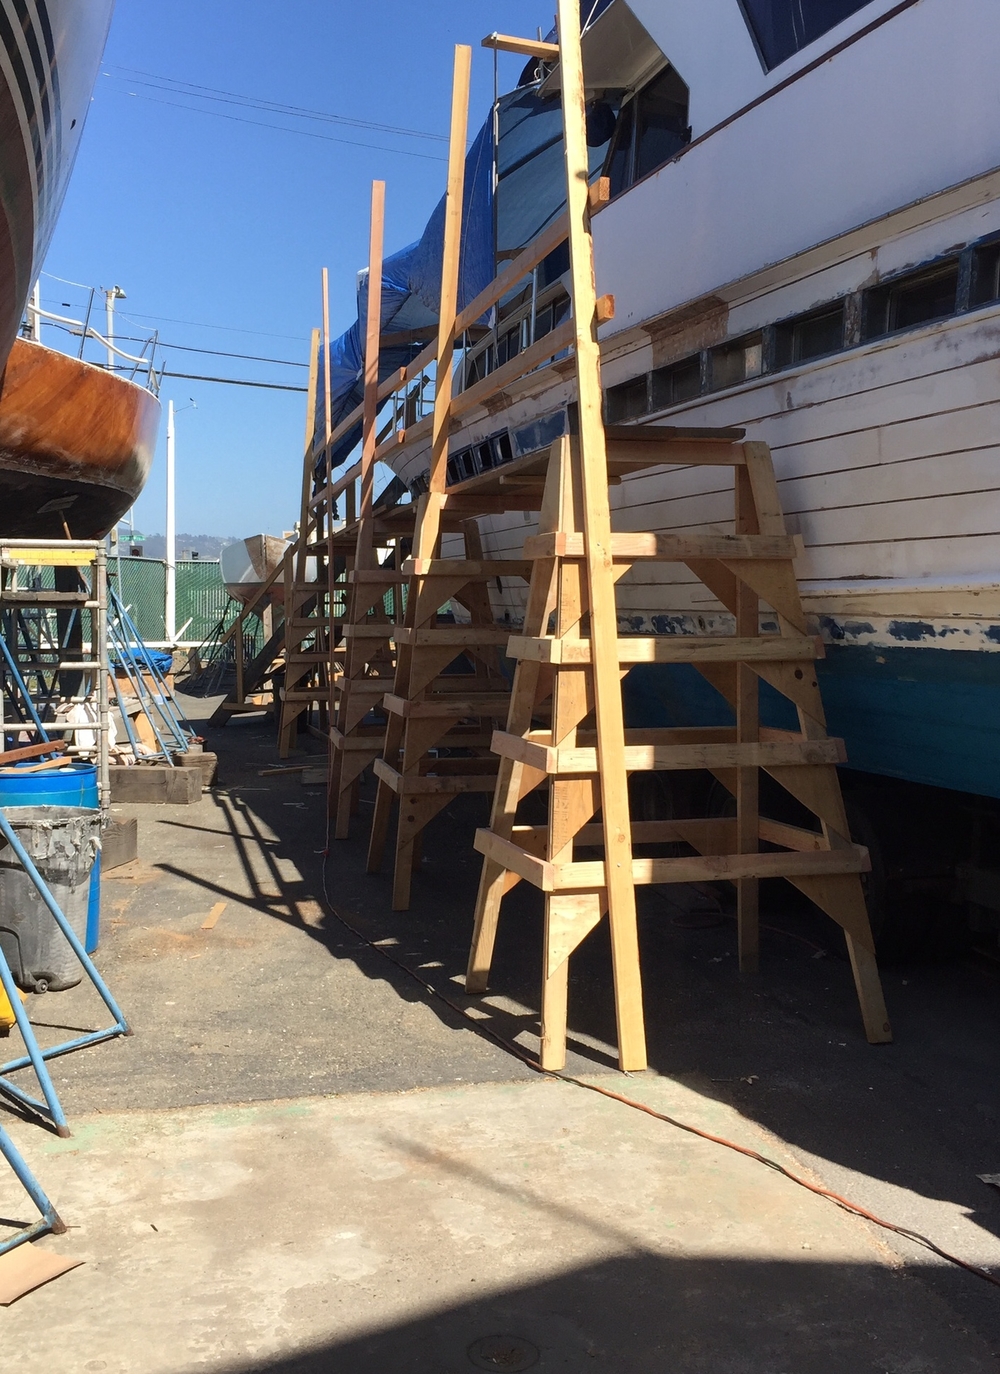 The OPEN shop — Shipwright Skills wooden boats